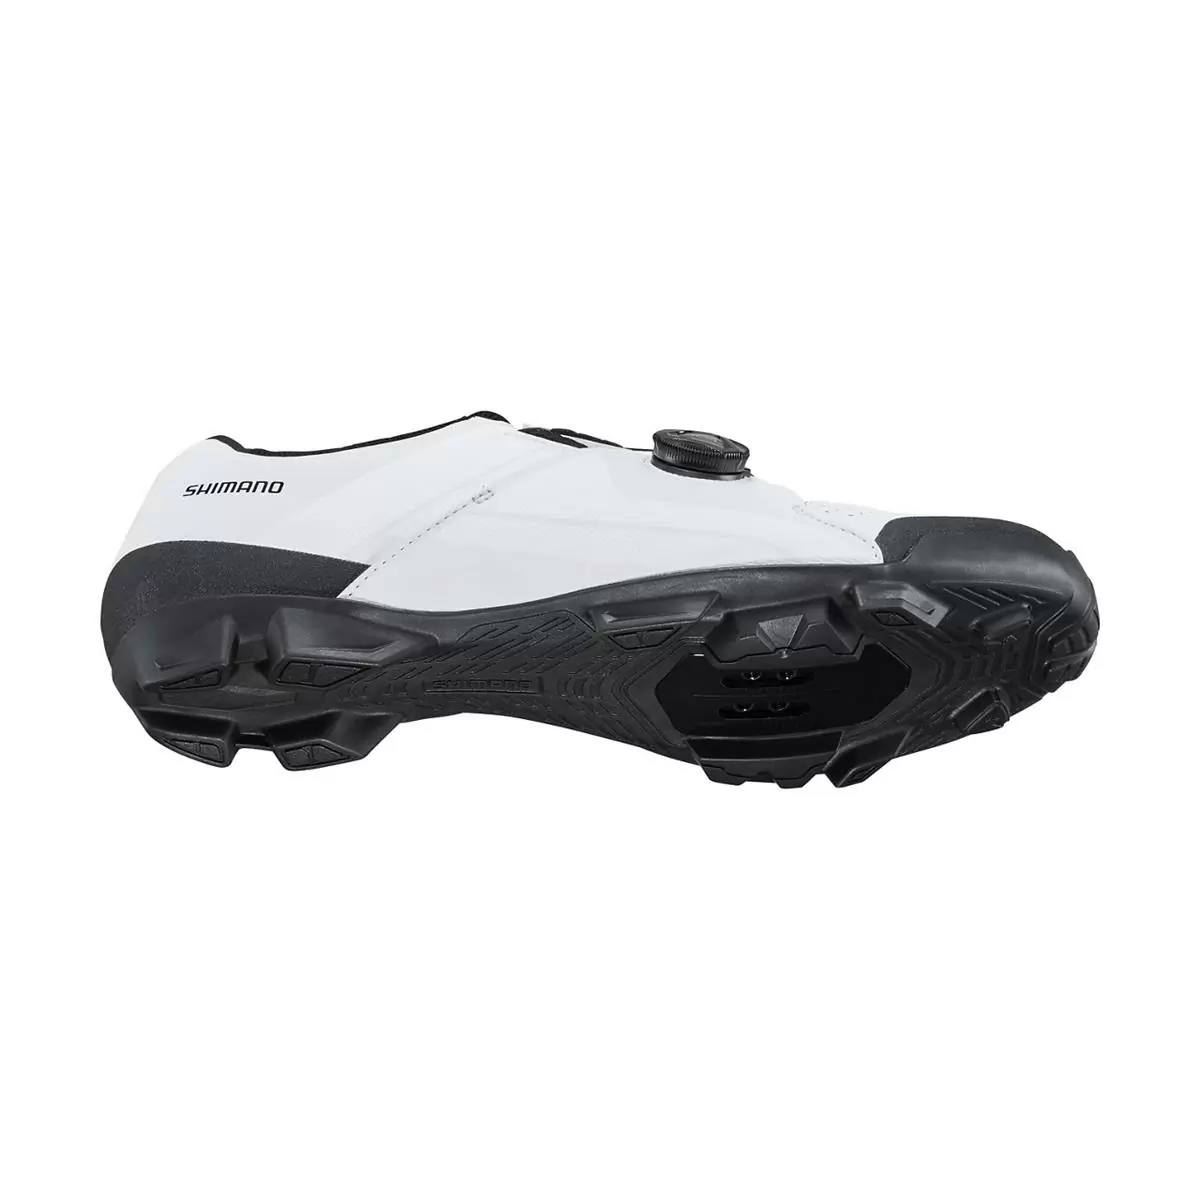 MTB shoes XC3 SH-XC300 White Size 47 #1